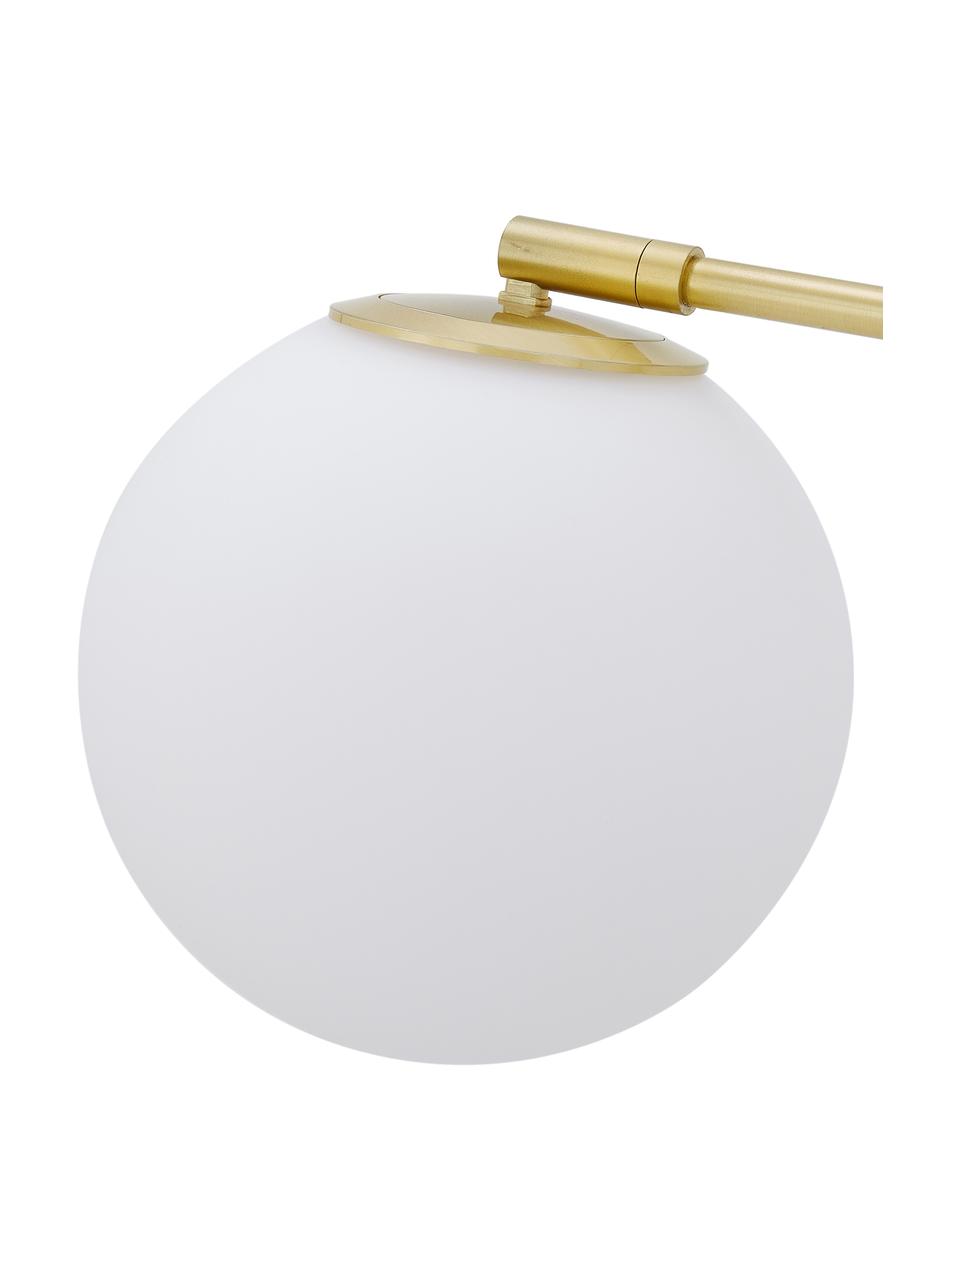 Stehlampe Moon aus Opalglas, Lampenschirm: Glas, Lampenfuß: Metall, vermessingt, Weiß, Messingfarben, H 162 cm